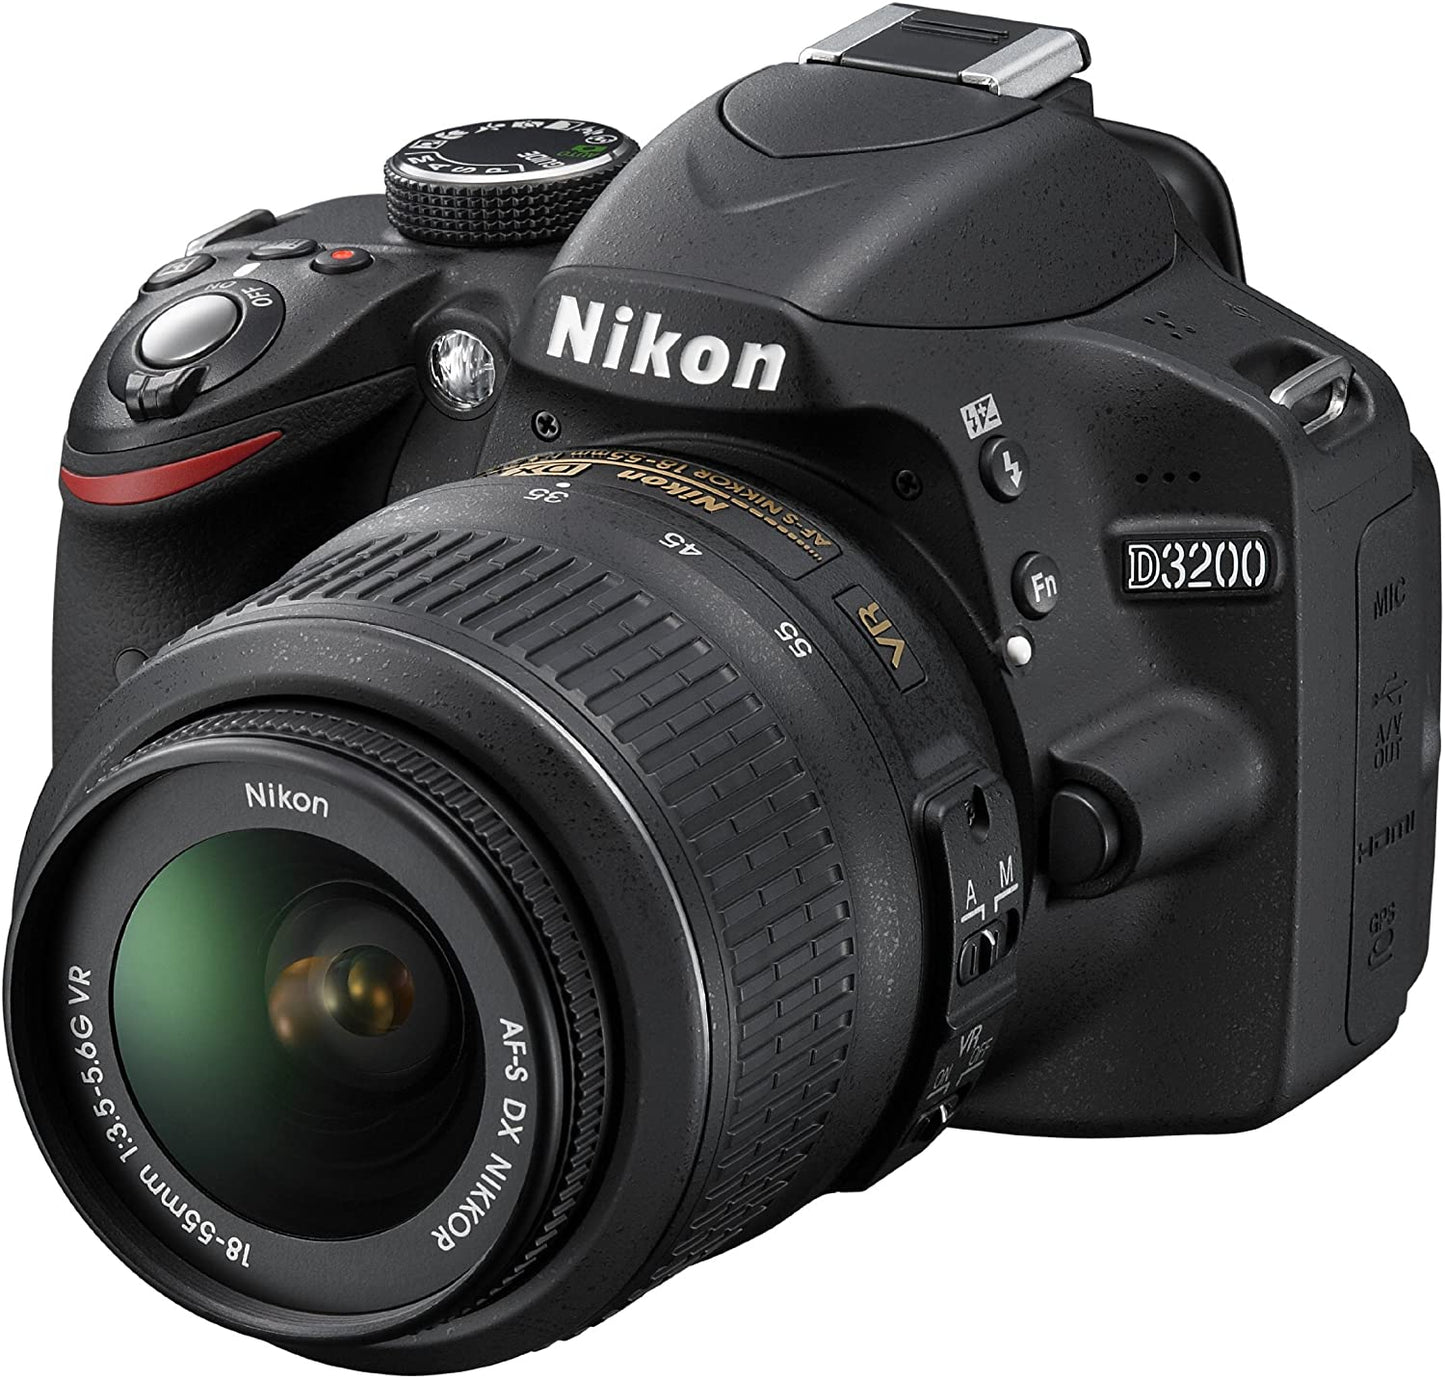 Nikon D3200 Camera 24.2 MP CMOS Digital SLR with 18-55mm f/3.5-5.6 Auto Focus-S DX VR NIKKOR Zoom Lens (Black) (USED) R 4500